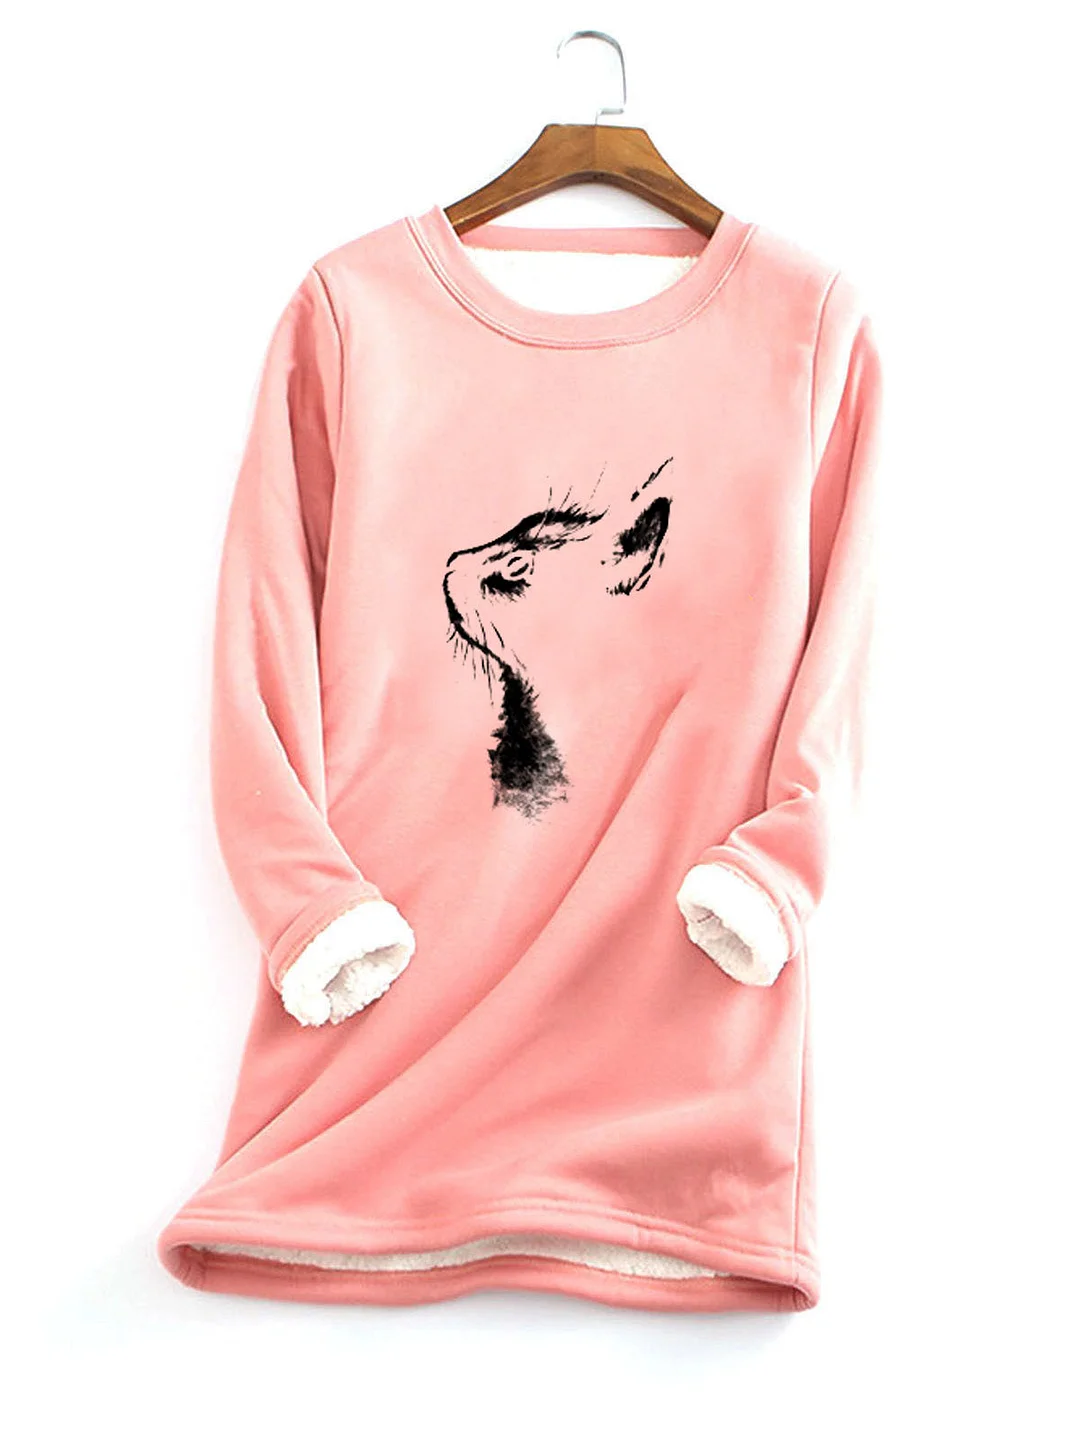 Women Long Sleeve Scoop Neck Fluff/Granular fleece fabric Printed Sweatshirts Tops